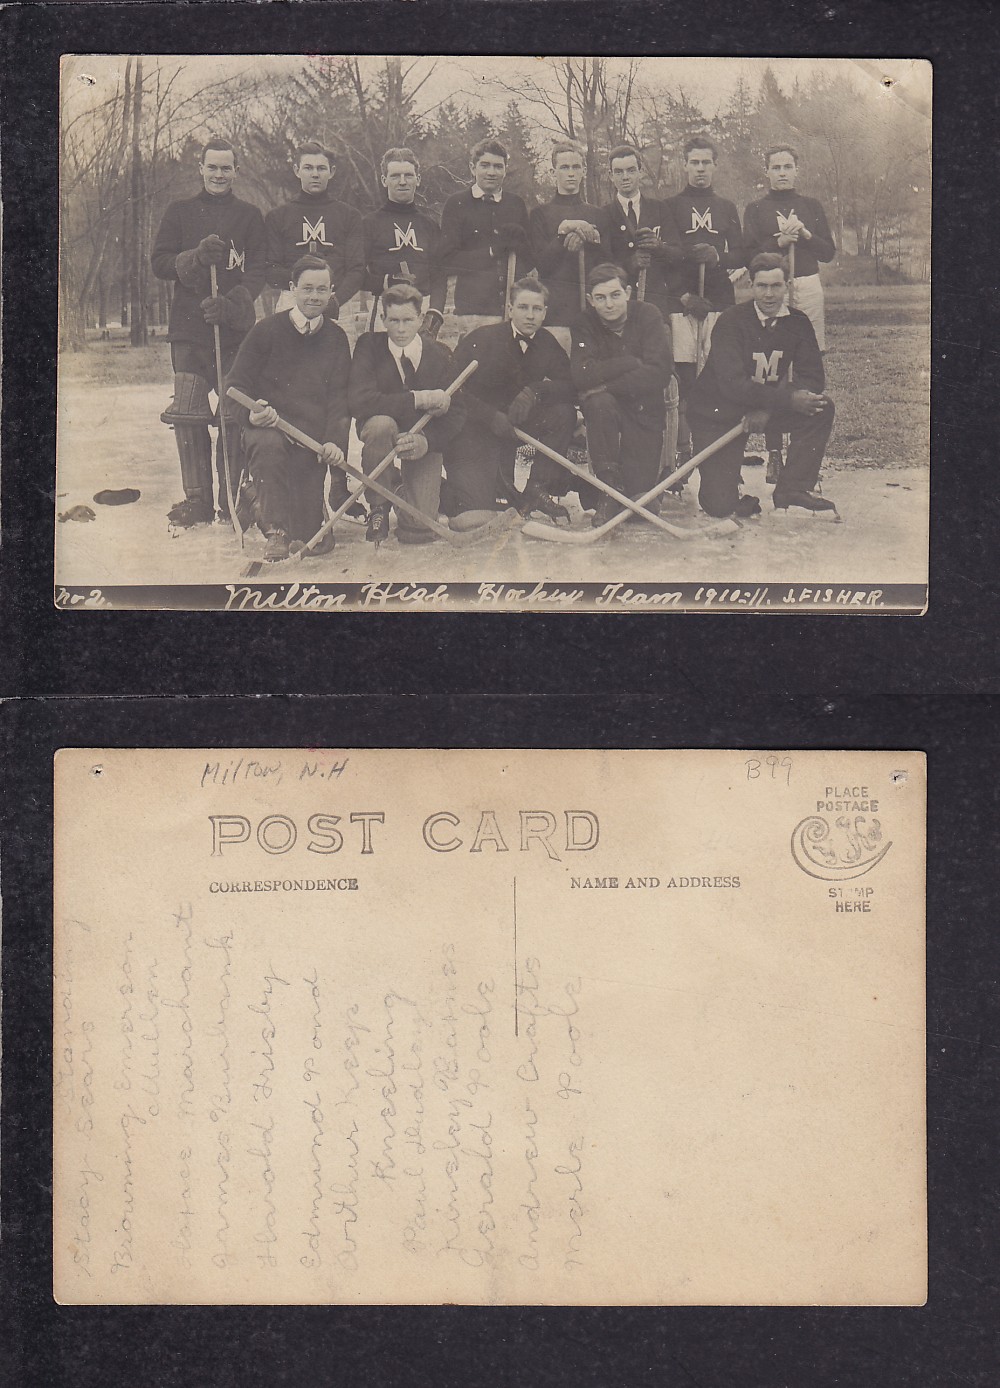 1910-11 MILTON HOCKEY TEAM POST CARD photo